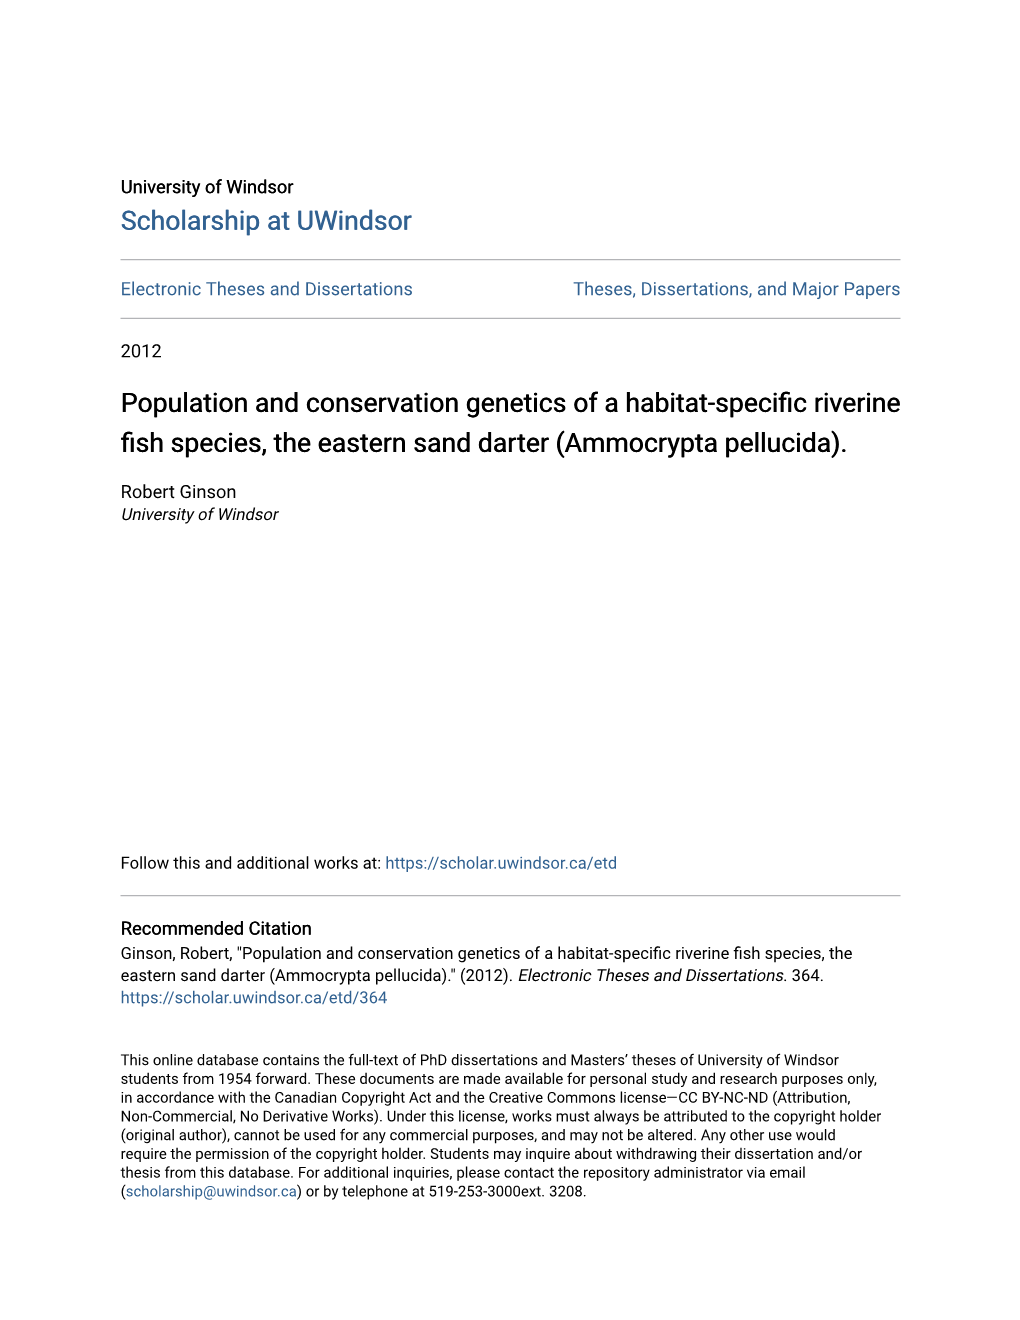 Population and Conservation Genetics of a Habitat-Specific Riverine Fish Species, the Eastern Sand Darter (Ammocrypta Pellucida)